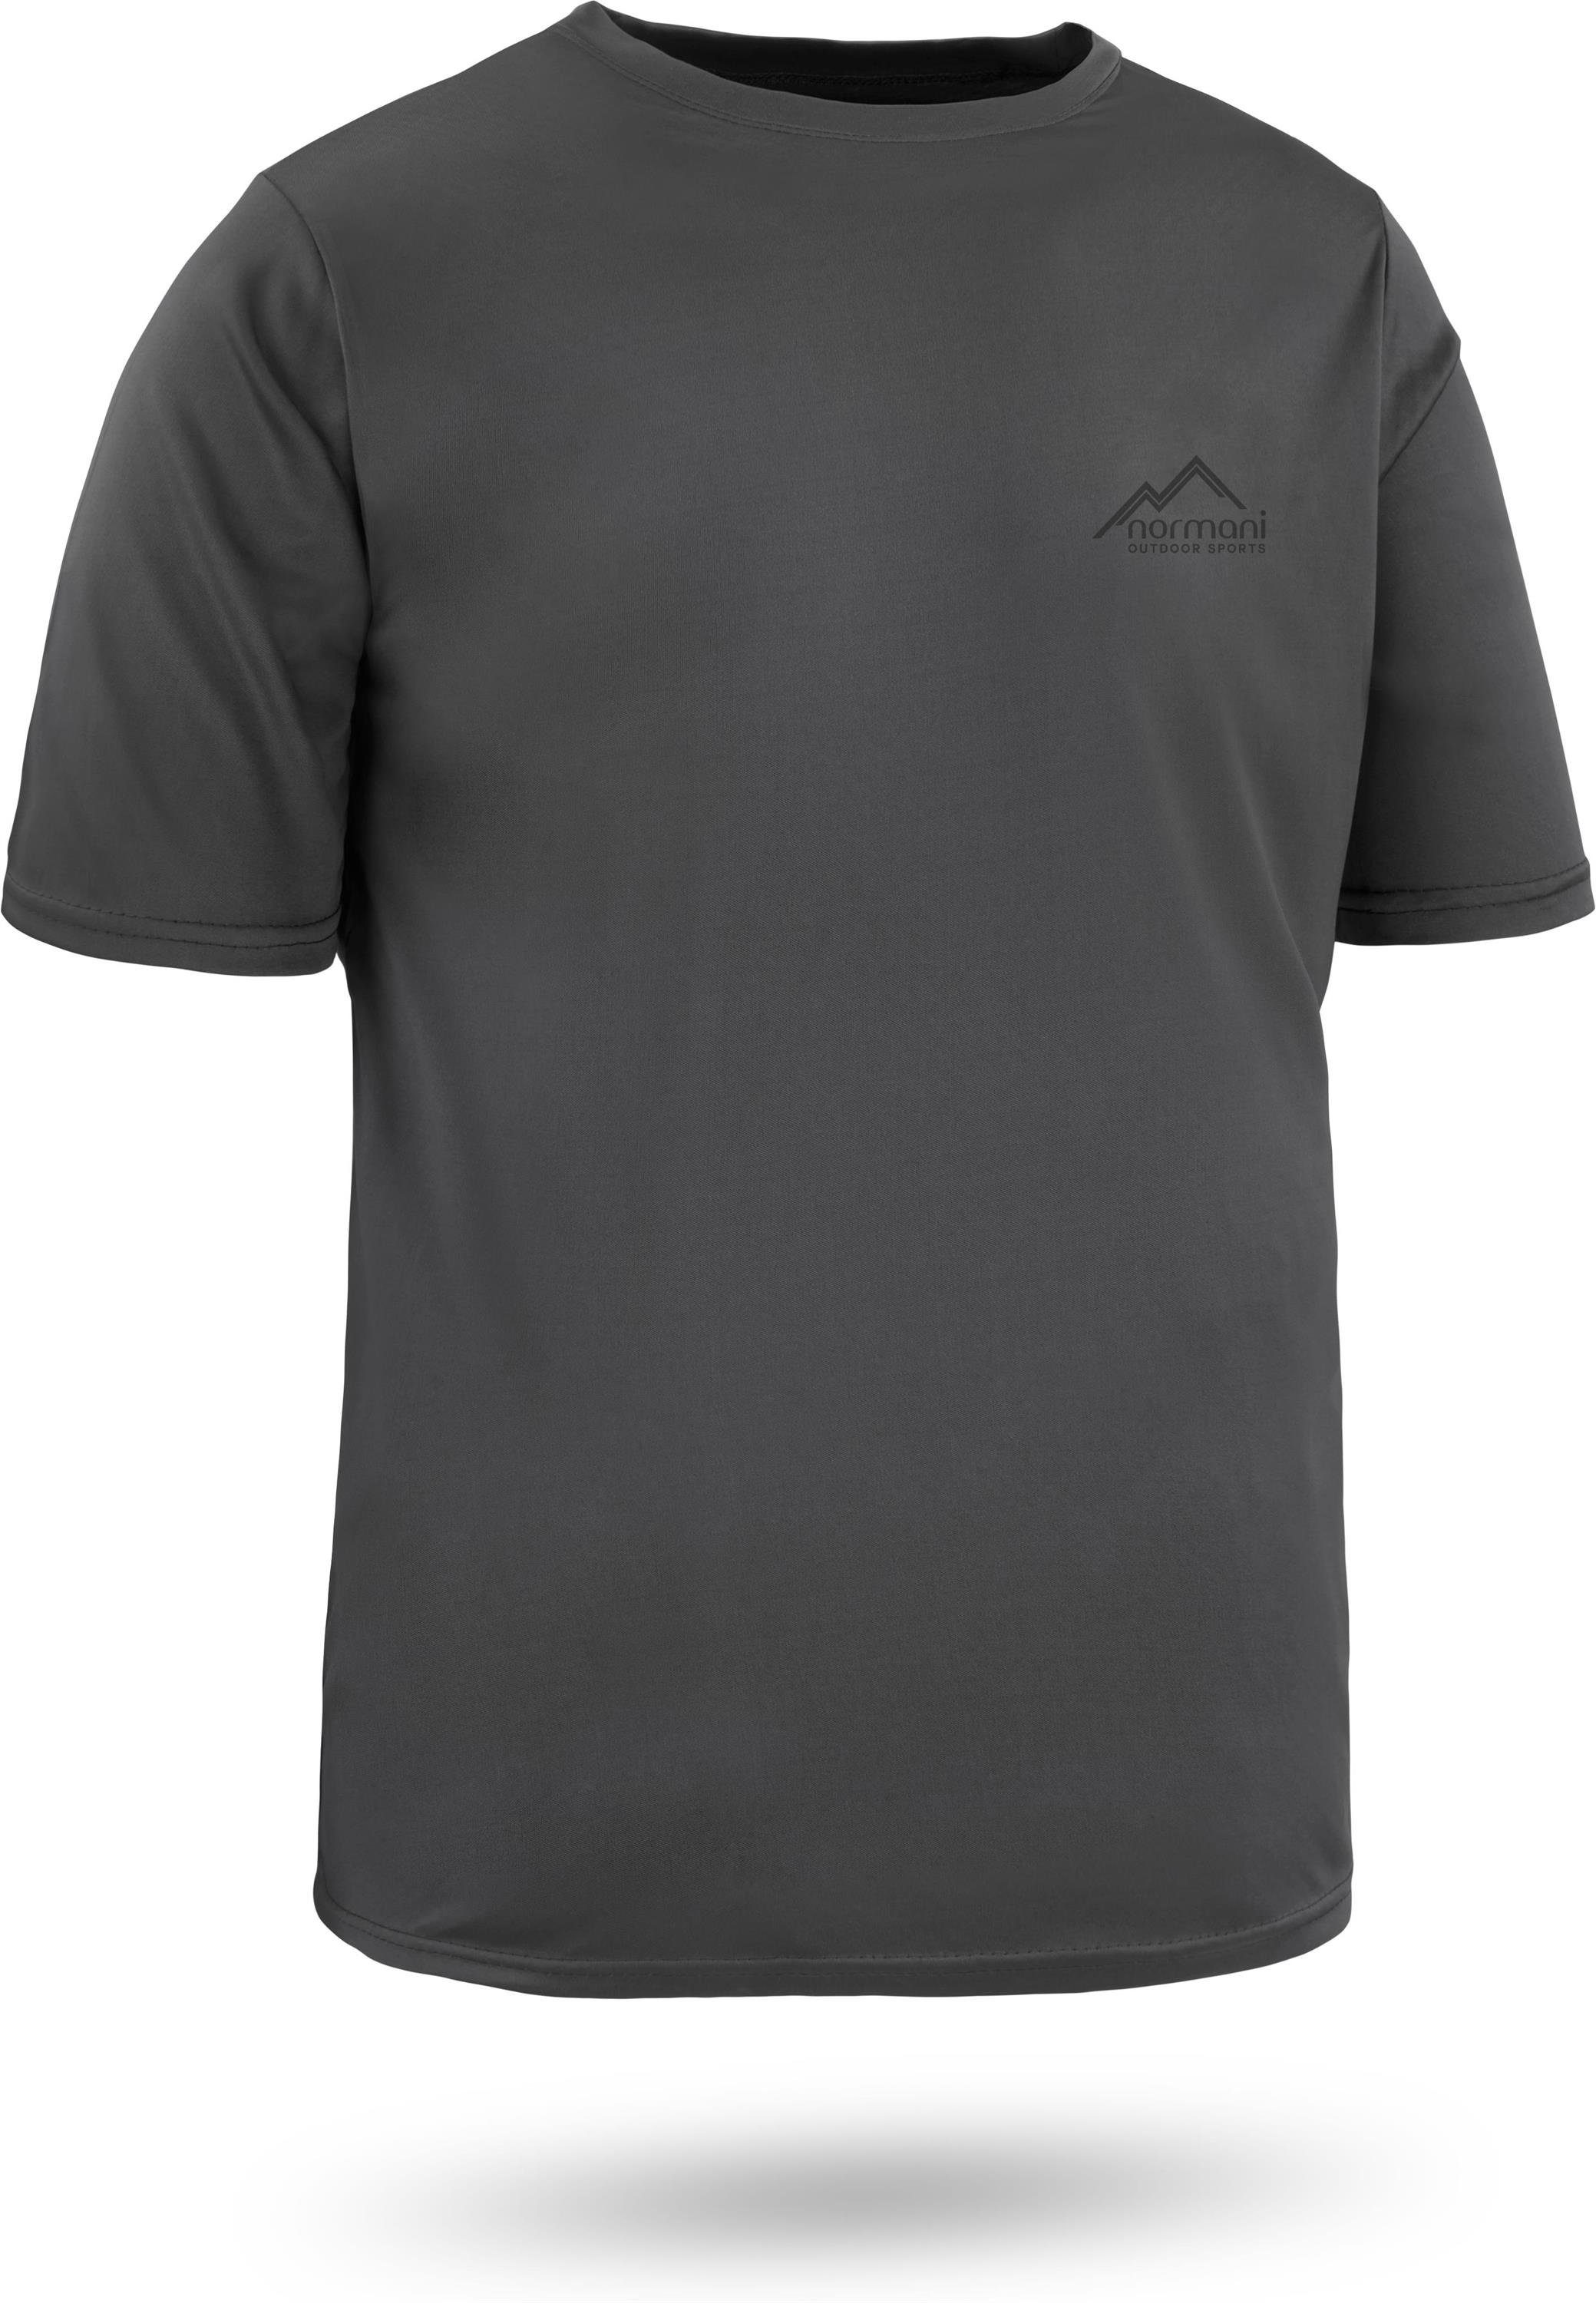 Cooling-Material Funktionsshirt Agra mt Grau Sportswear normani Fitness Herren Kurzarm Shirt T-Shirt Funktions-Sport